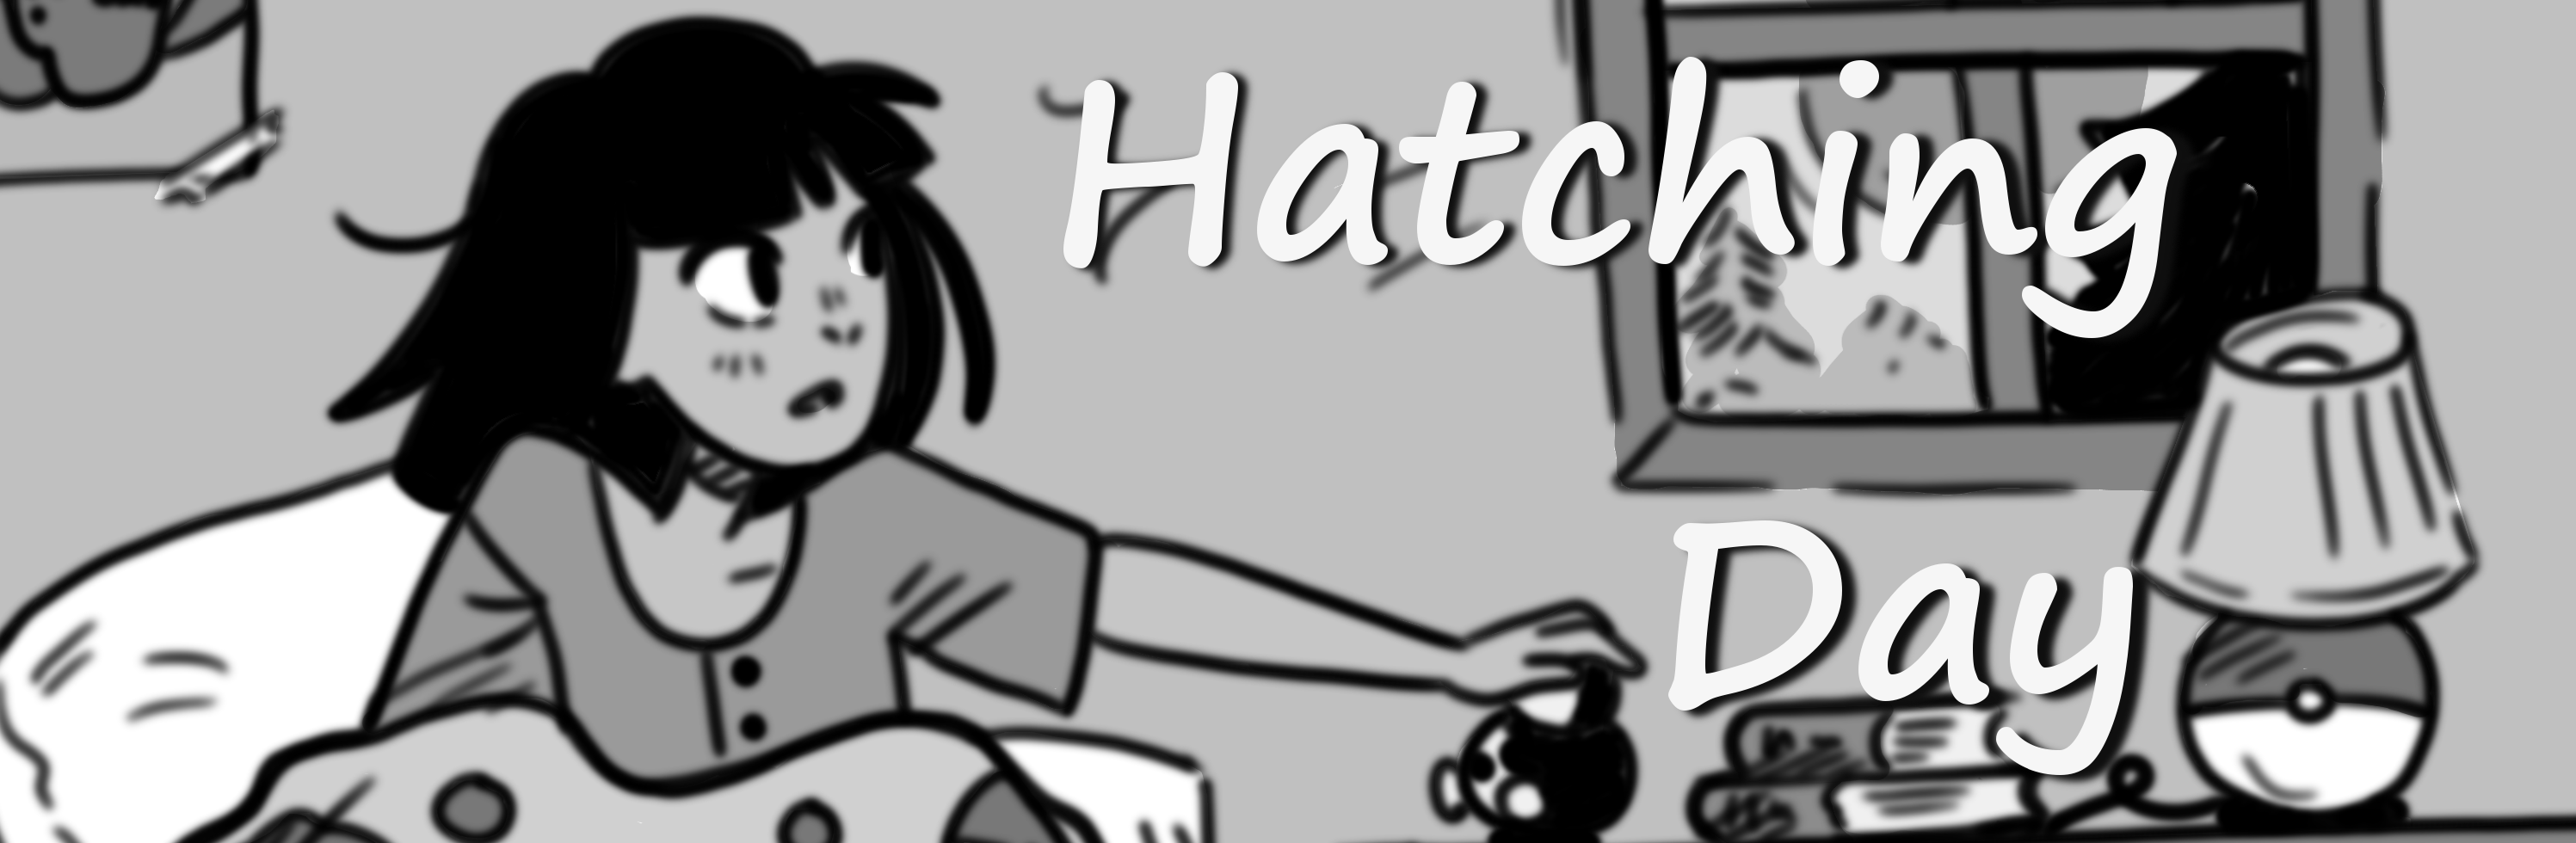 Hatching Day banner